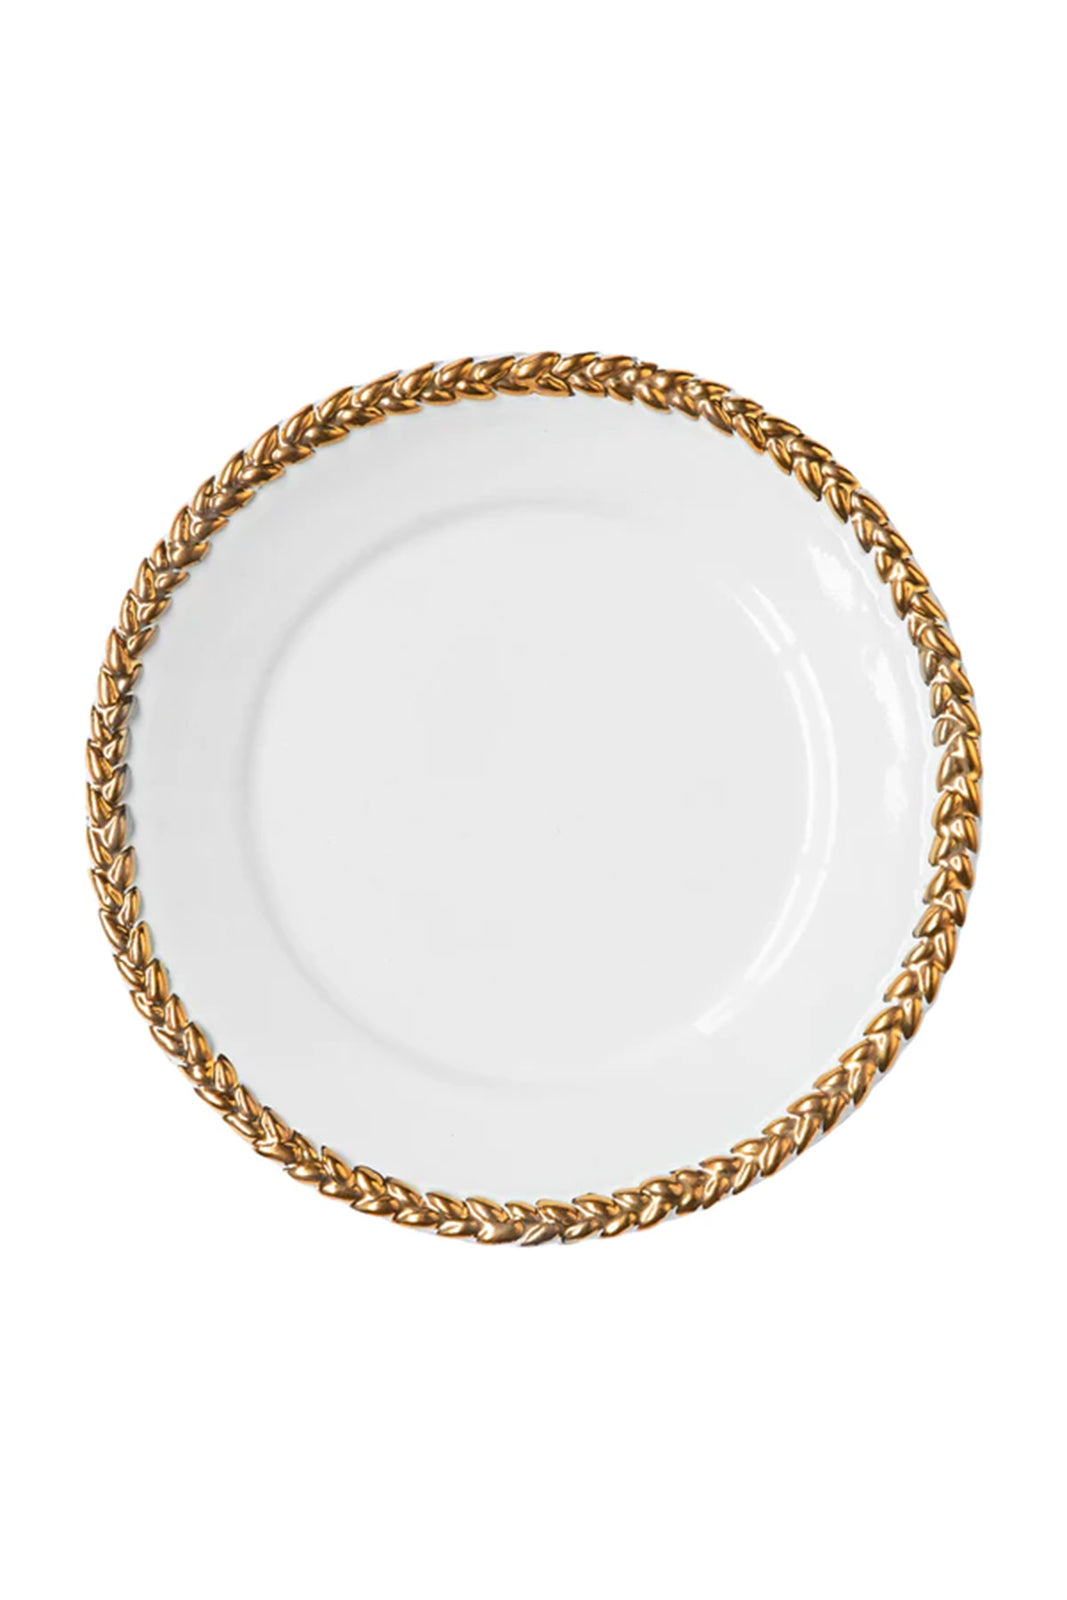 Josephine Gold Dessert Plate